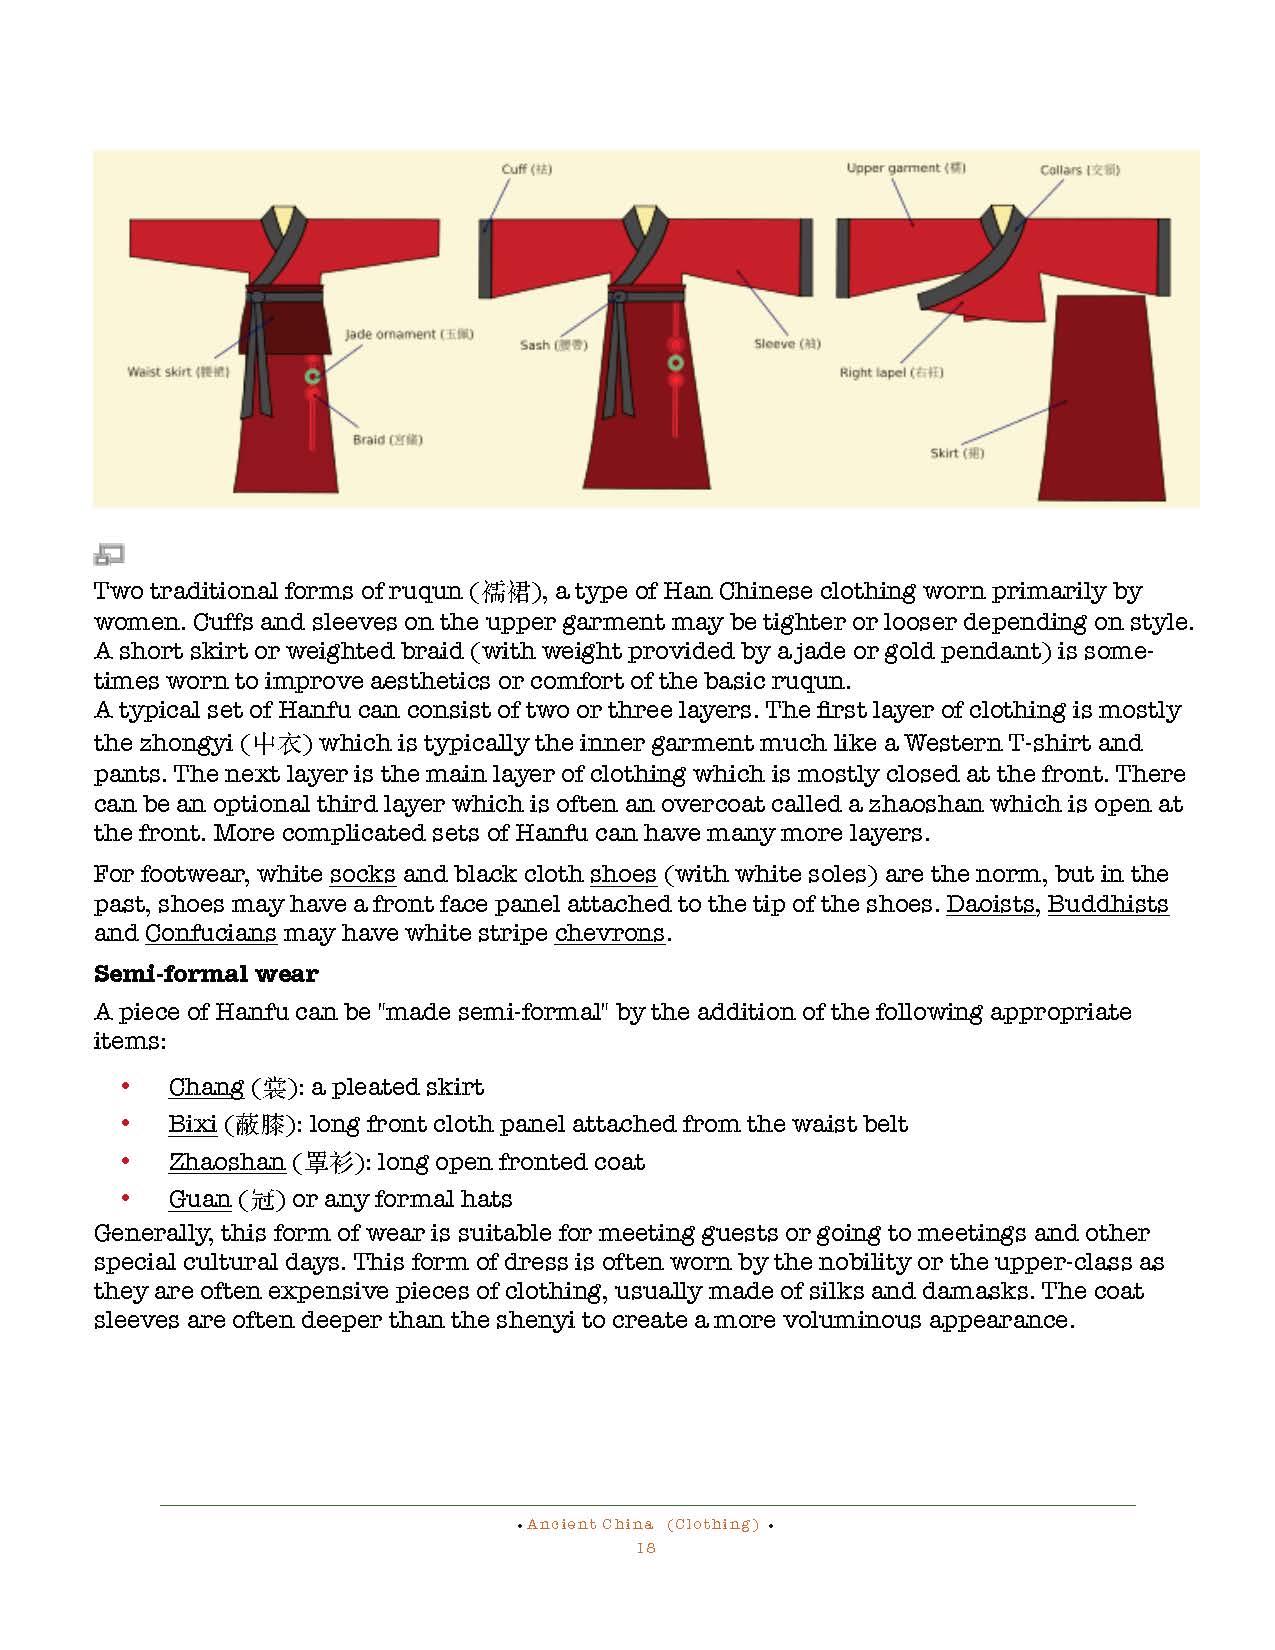 HOCE- Ancient China Notes (clothing)_Page_18.jpg